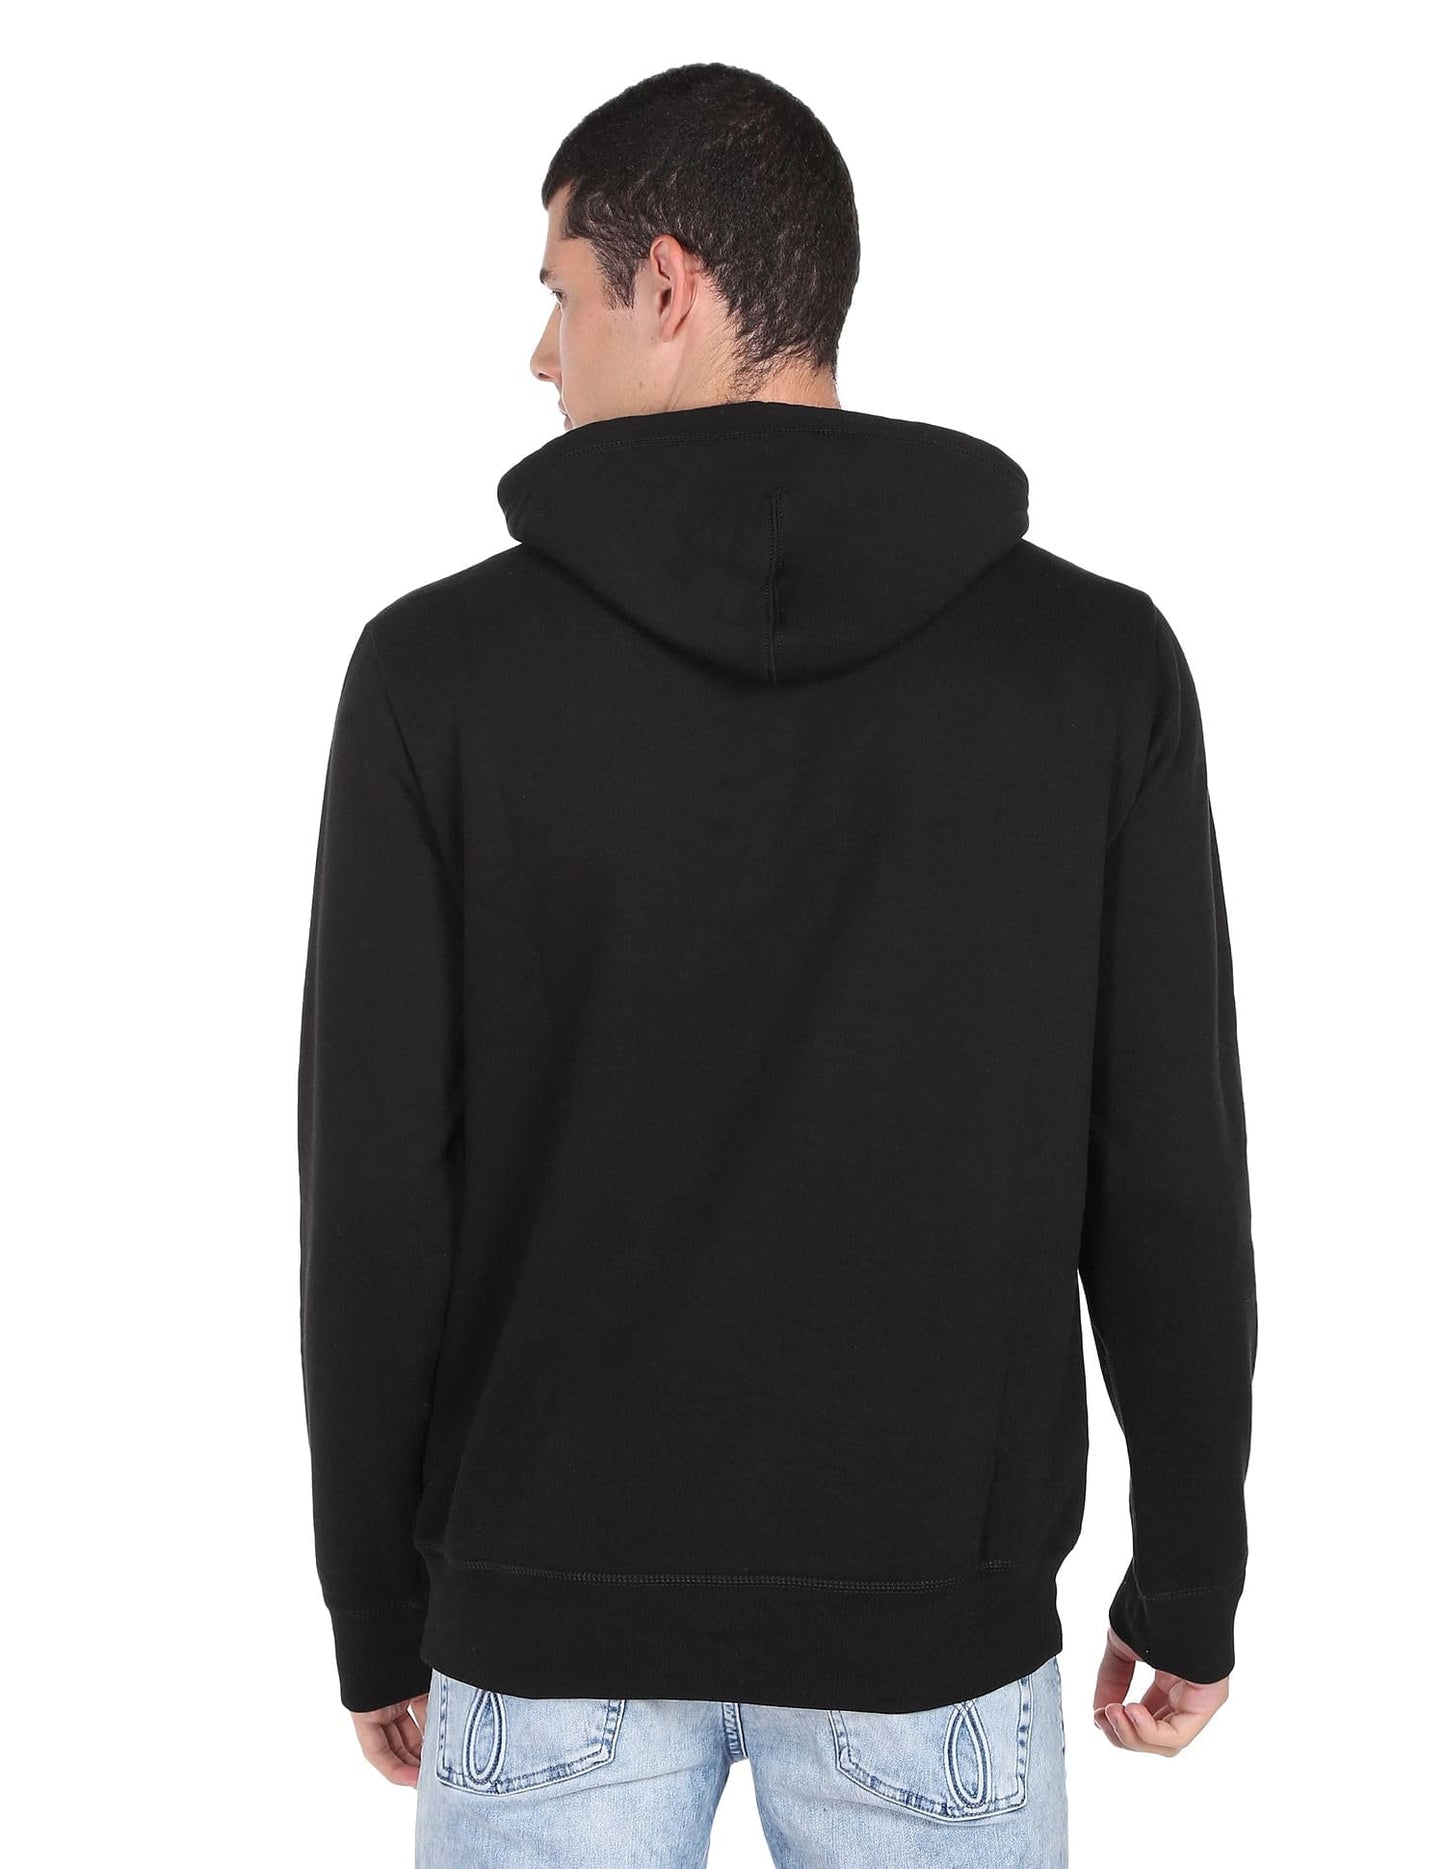 Tommy Hilfiger Men's Cotton Blend Hooded Neck Sweatshirt (A1AMH246_Black